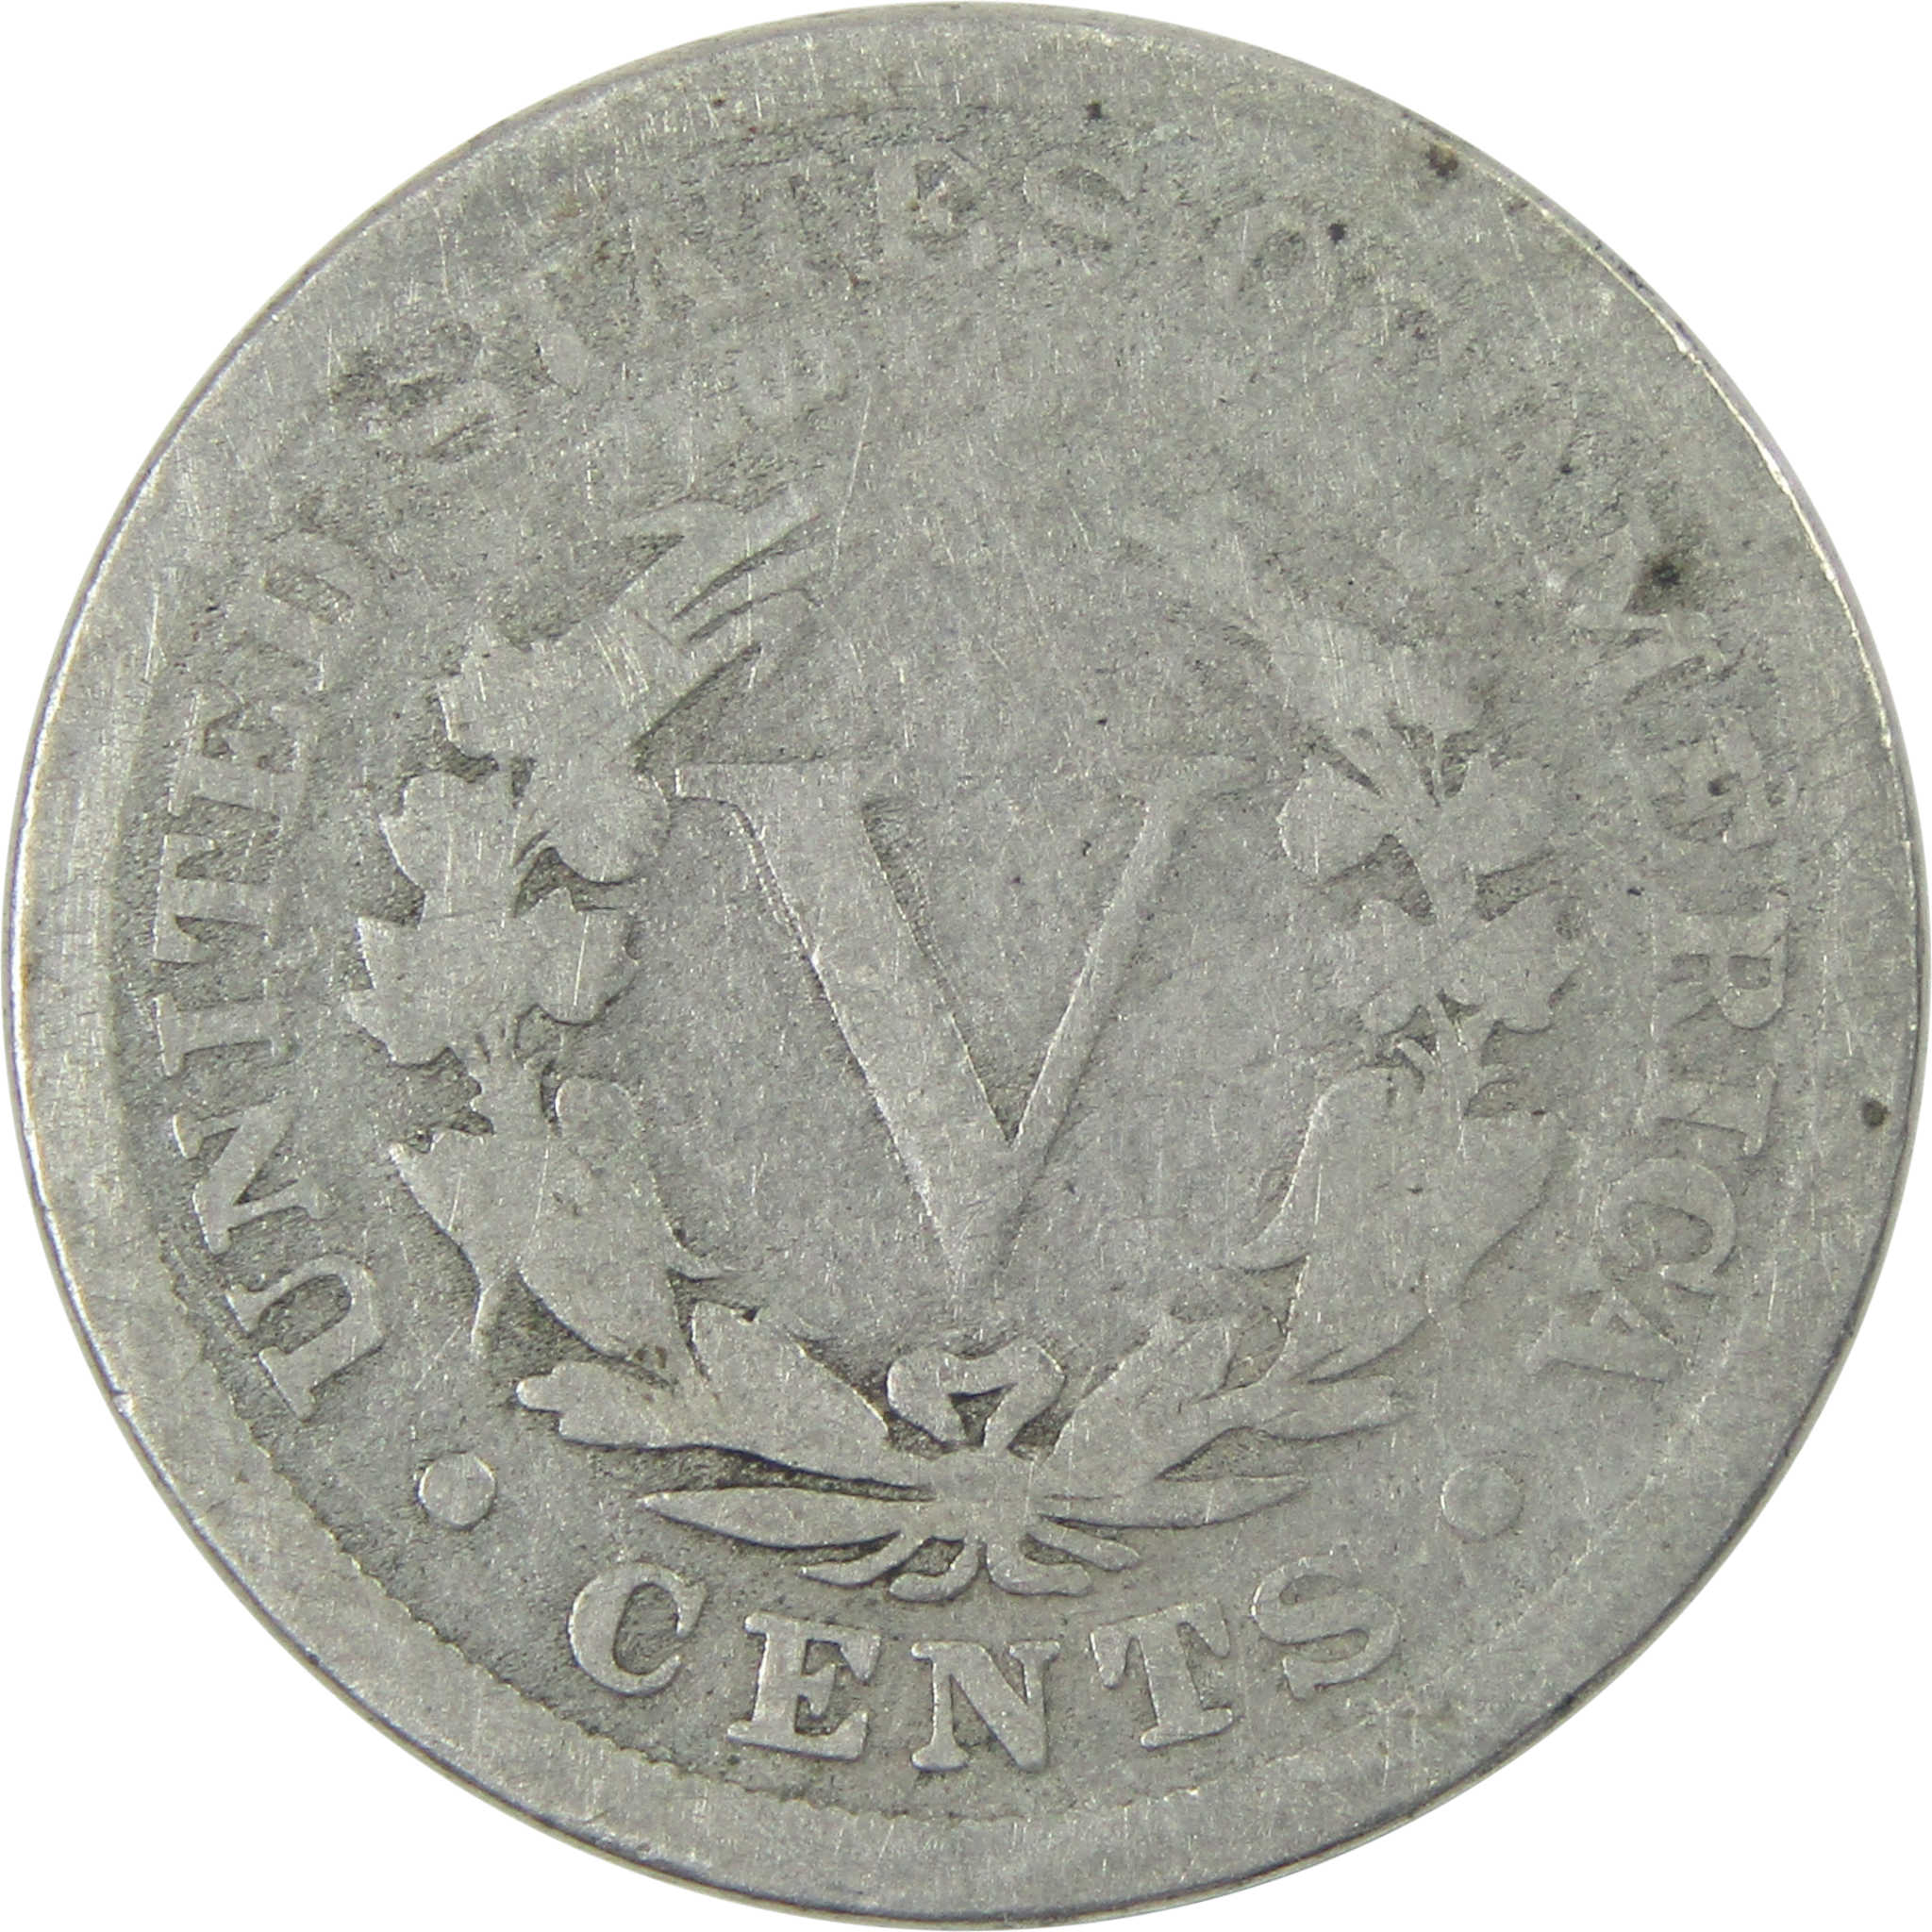 1884 Liberty Head V Nickel G Good Details 5c Coin SKU:I14005